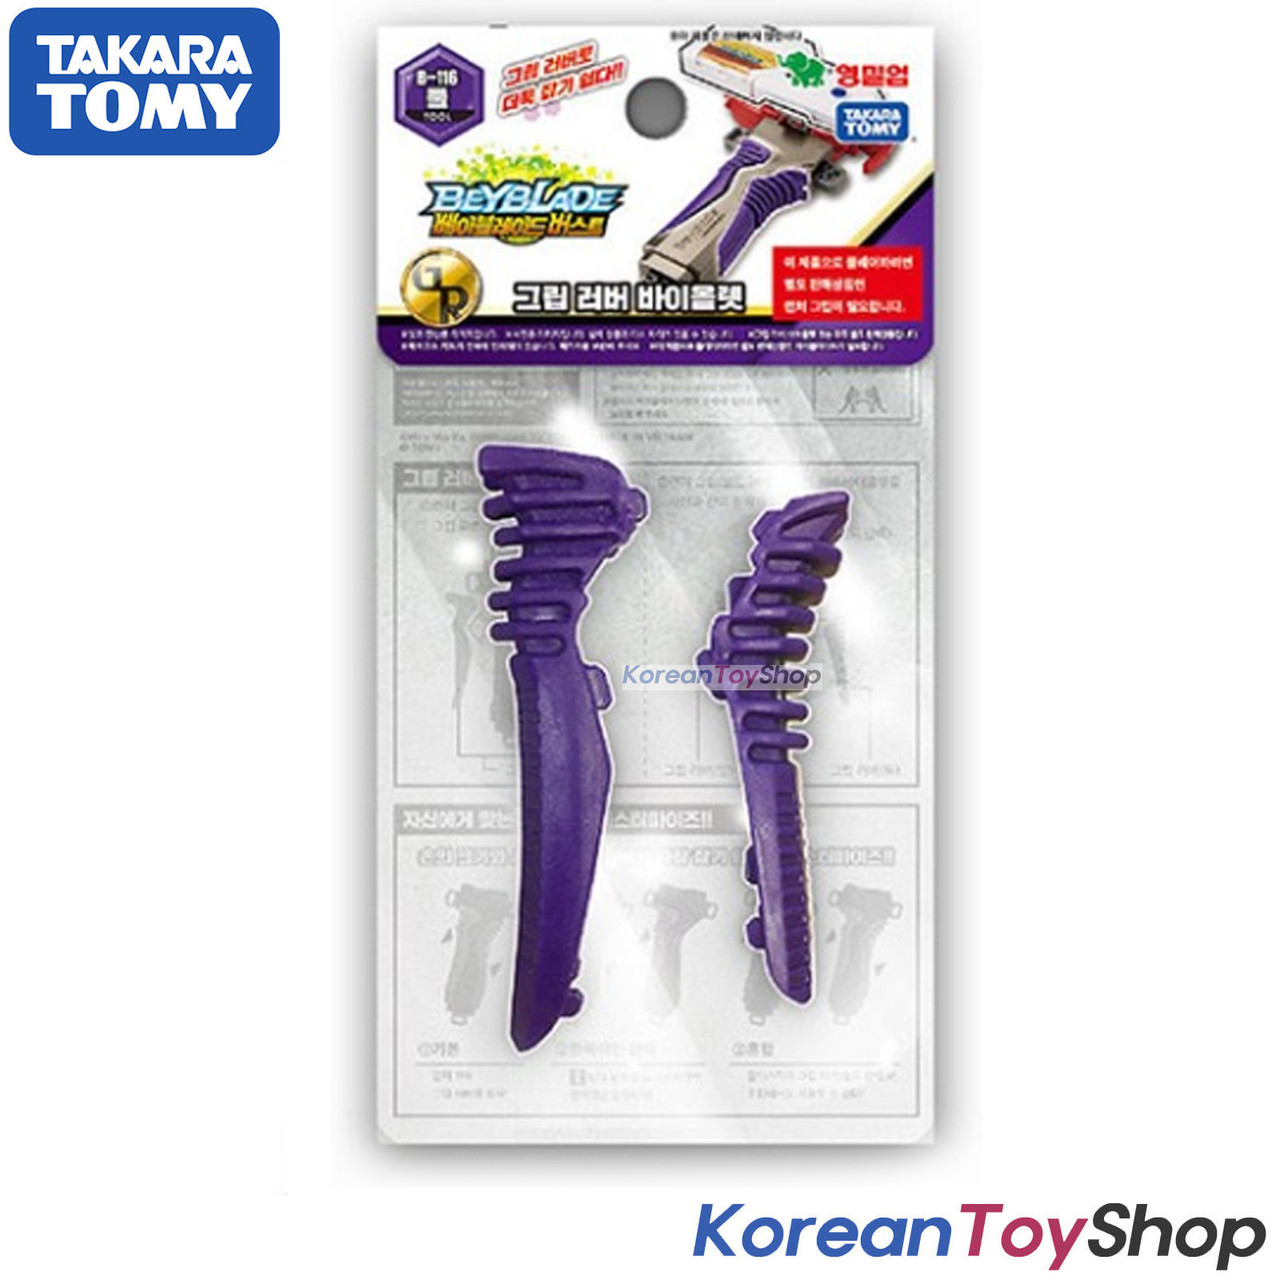 Exquisito Final científico Beyblade Burst B-116 Grip Rubber Violet for Launcher Grip Takara Tomy  Original